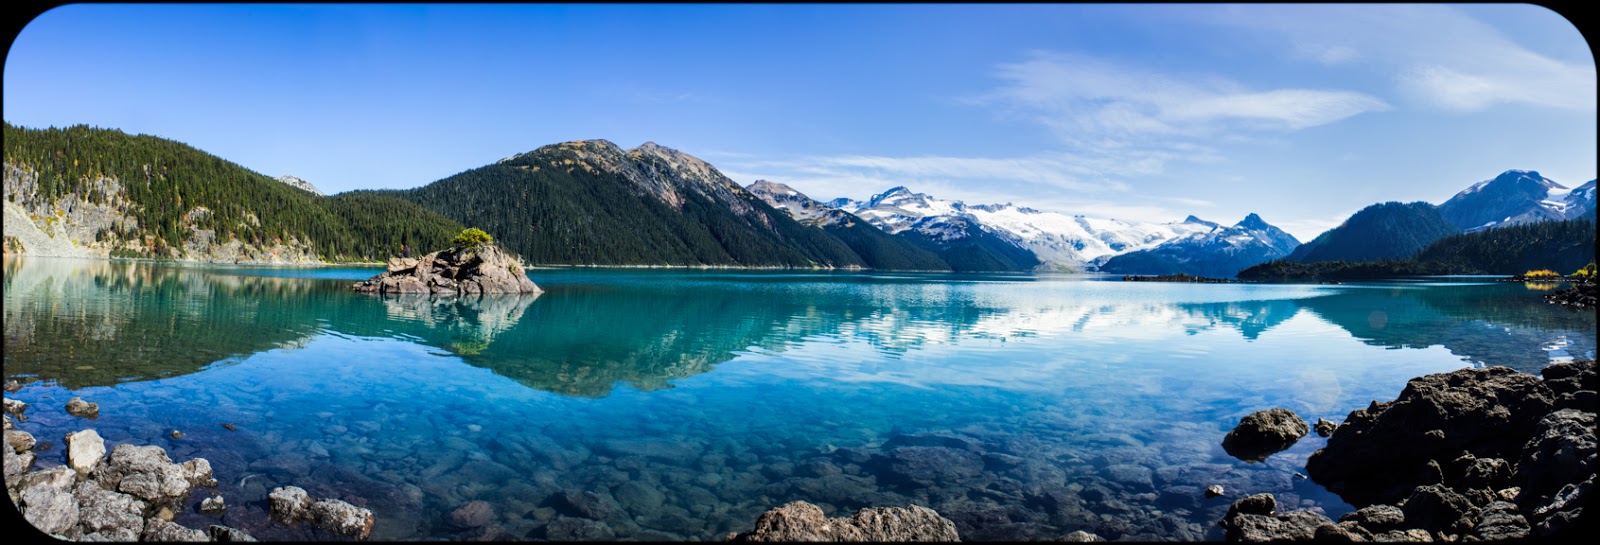 Images of Garibaldi Lake | 1600x545